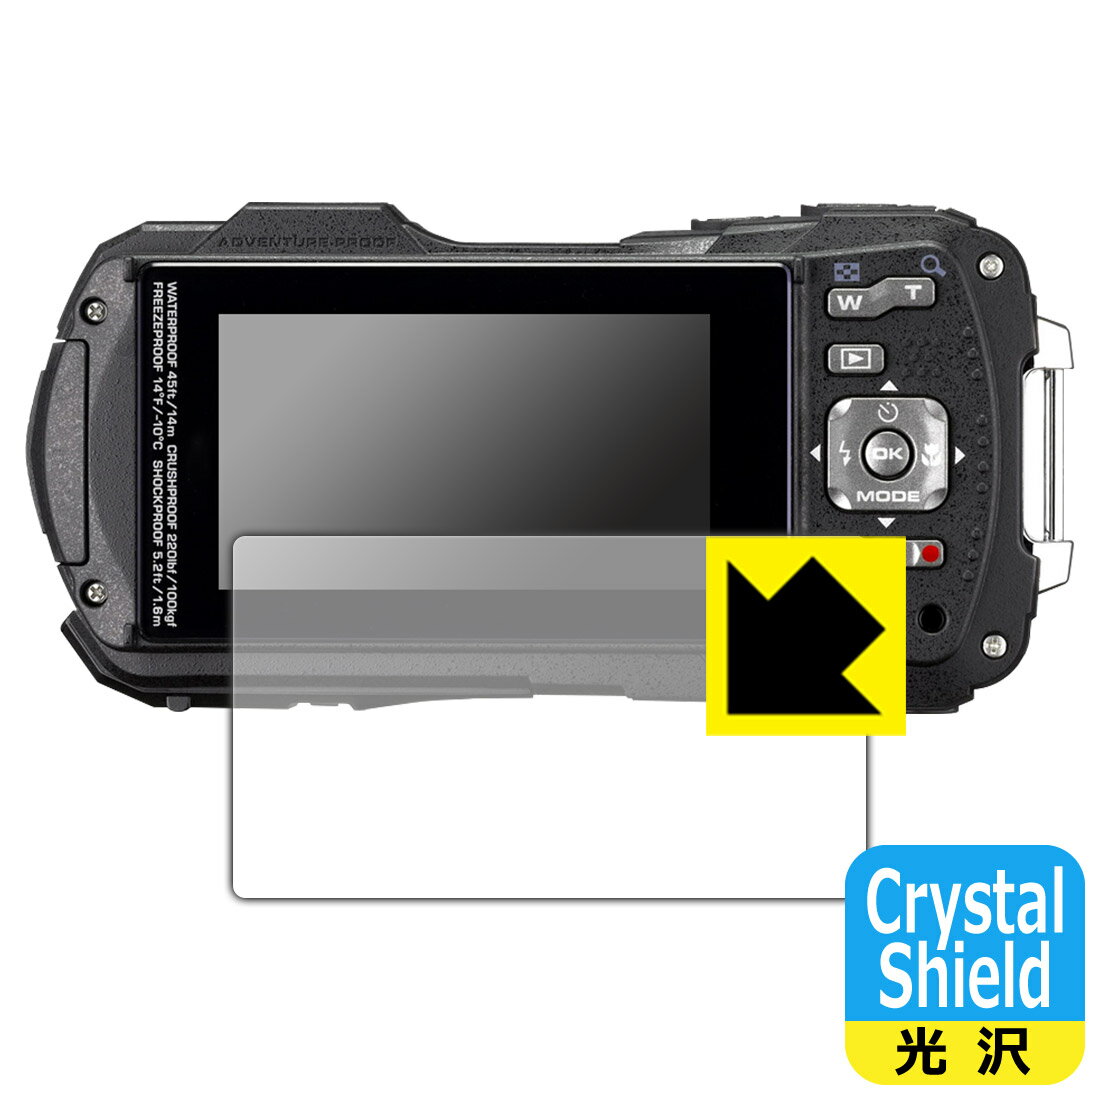 Crystal Shield【光沢】保護フィルム RICOH WG-80/WG-70/WG-60/WG-50/WG-40/WG-40W (3枚セット) 日本製 自社製造直販